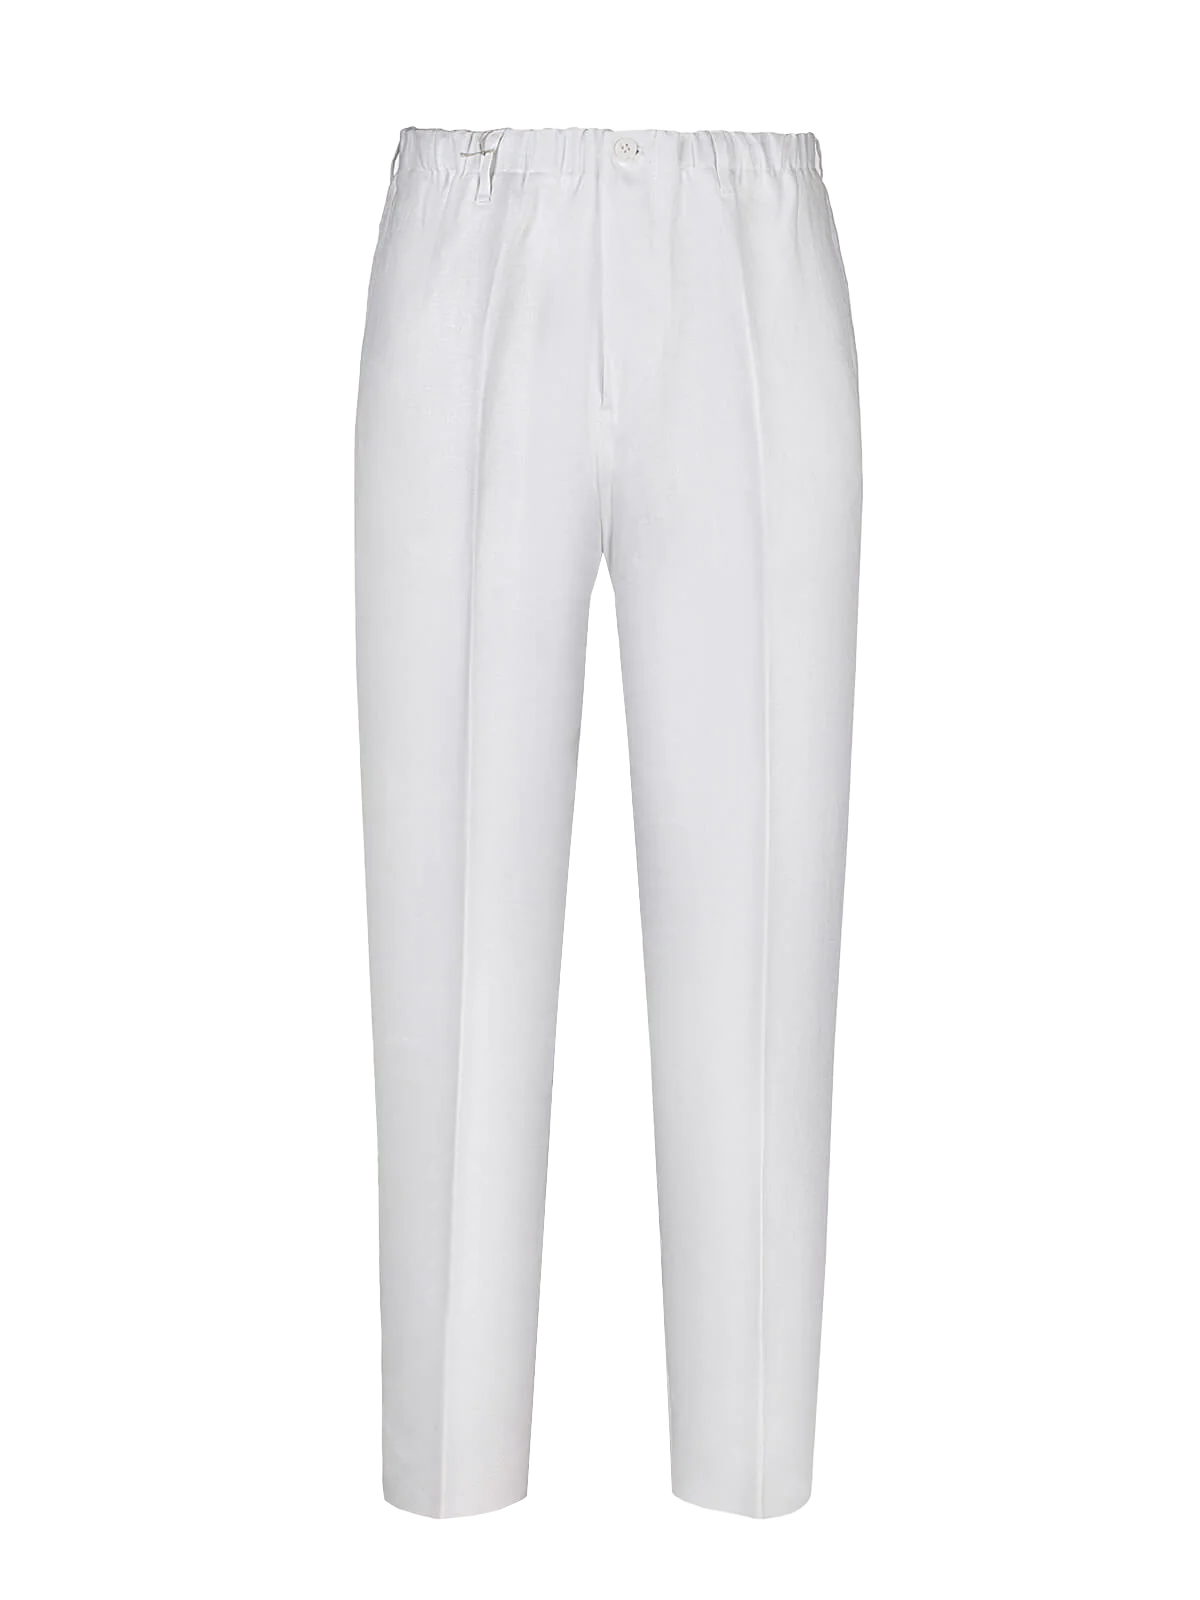 Pantalone Positano 100% capri for Man linen white trouser front